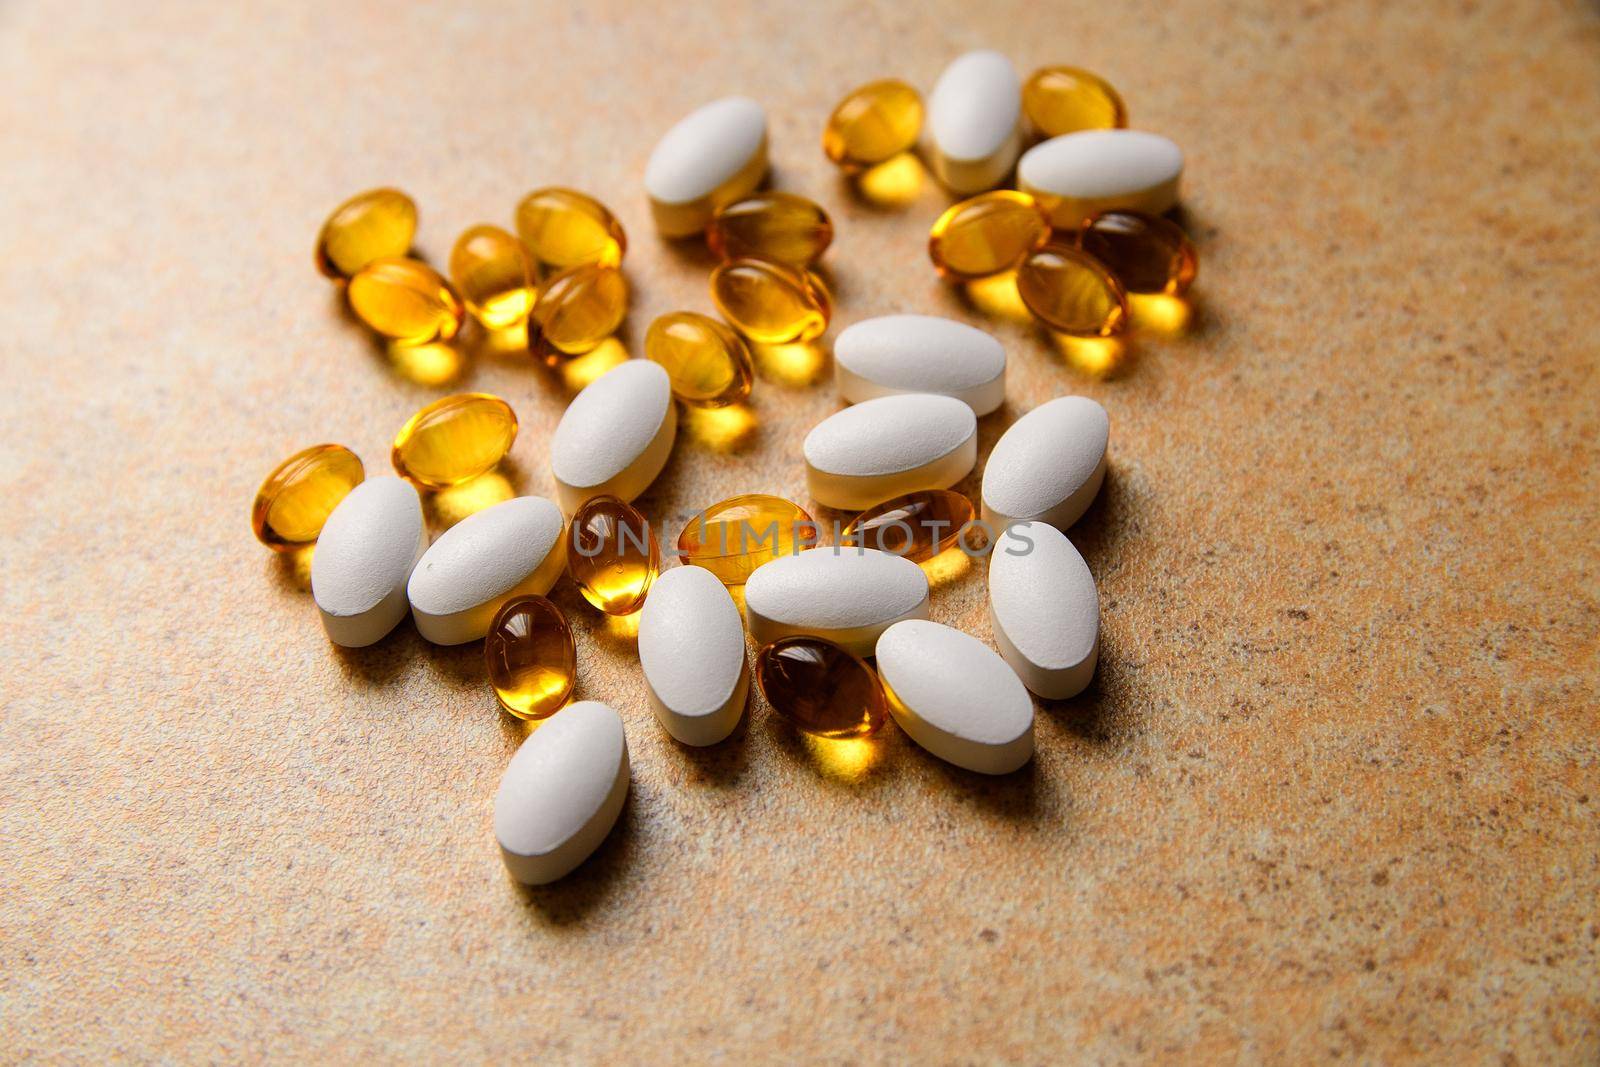 Vitamin D and fish oil capsules  by ozornina